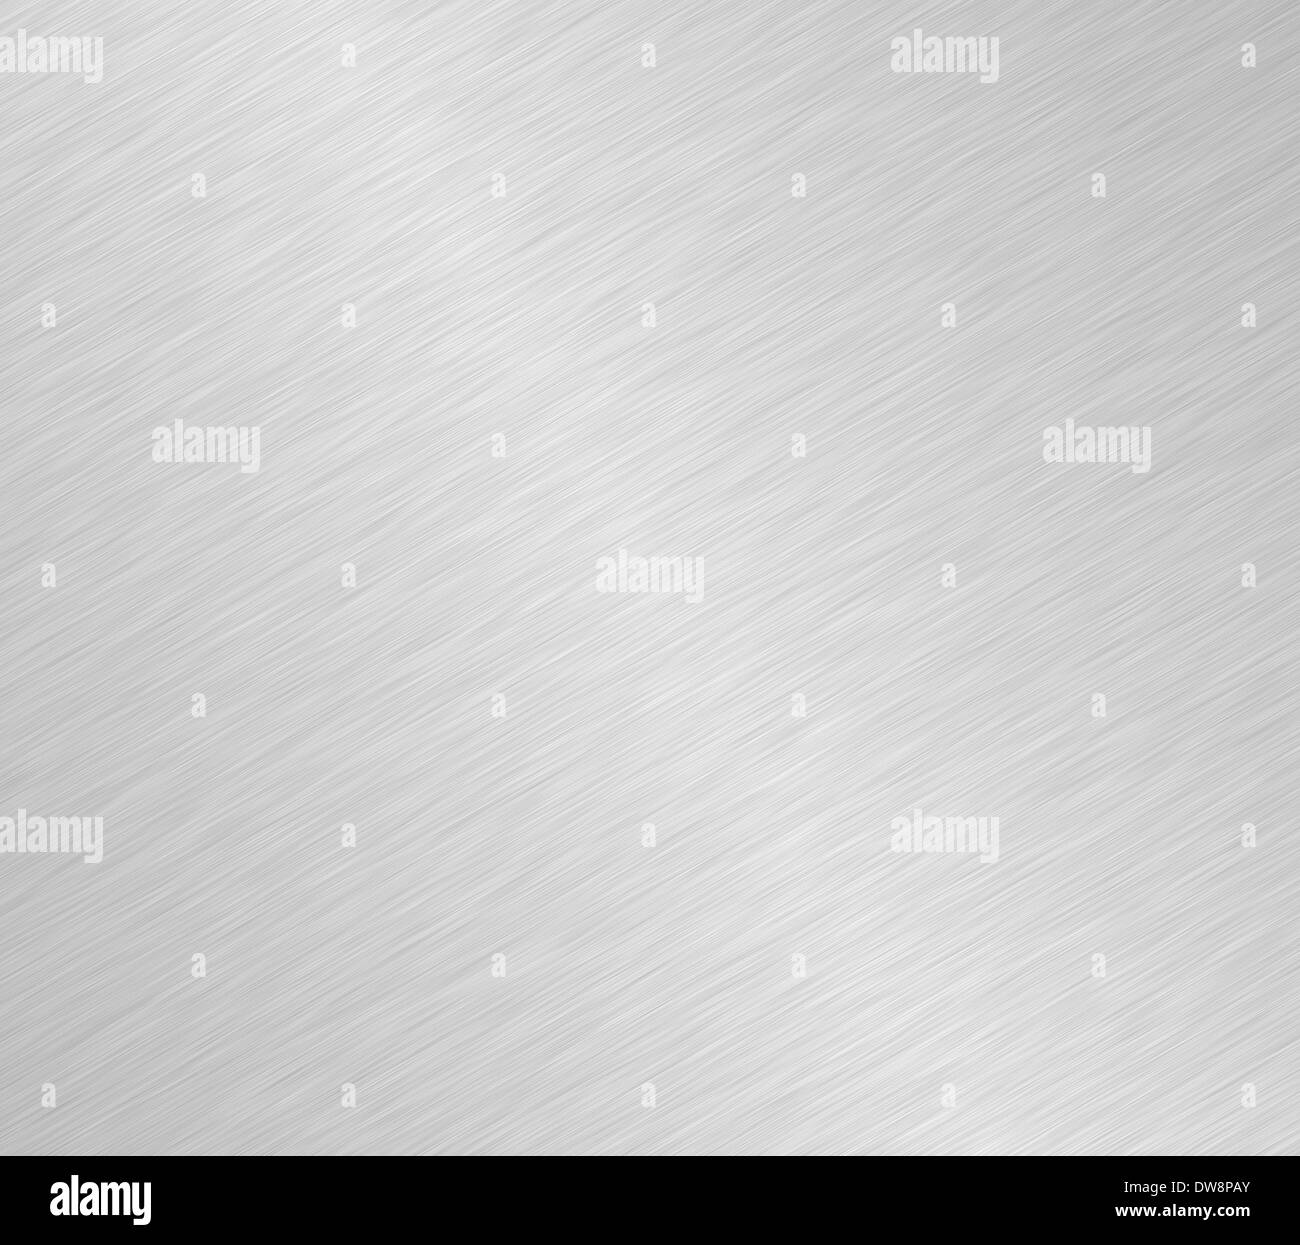 Seamless metal texture background Stock Photo - Alamy